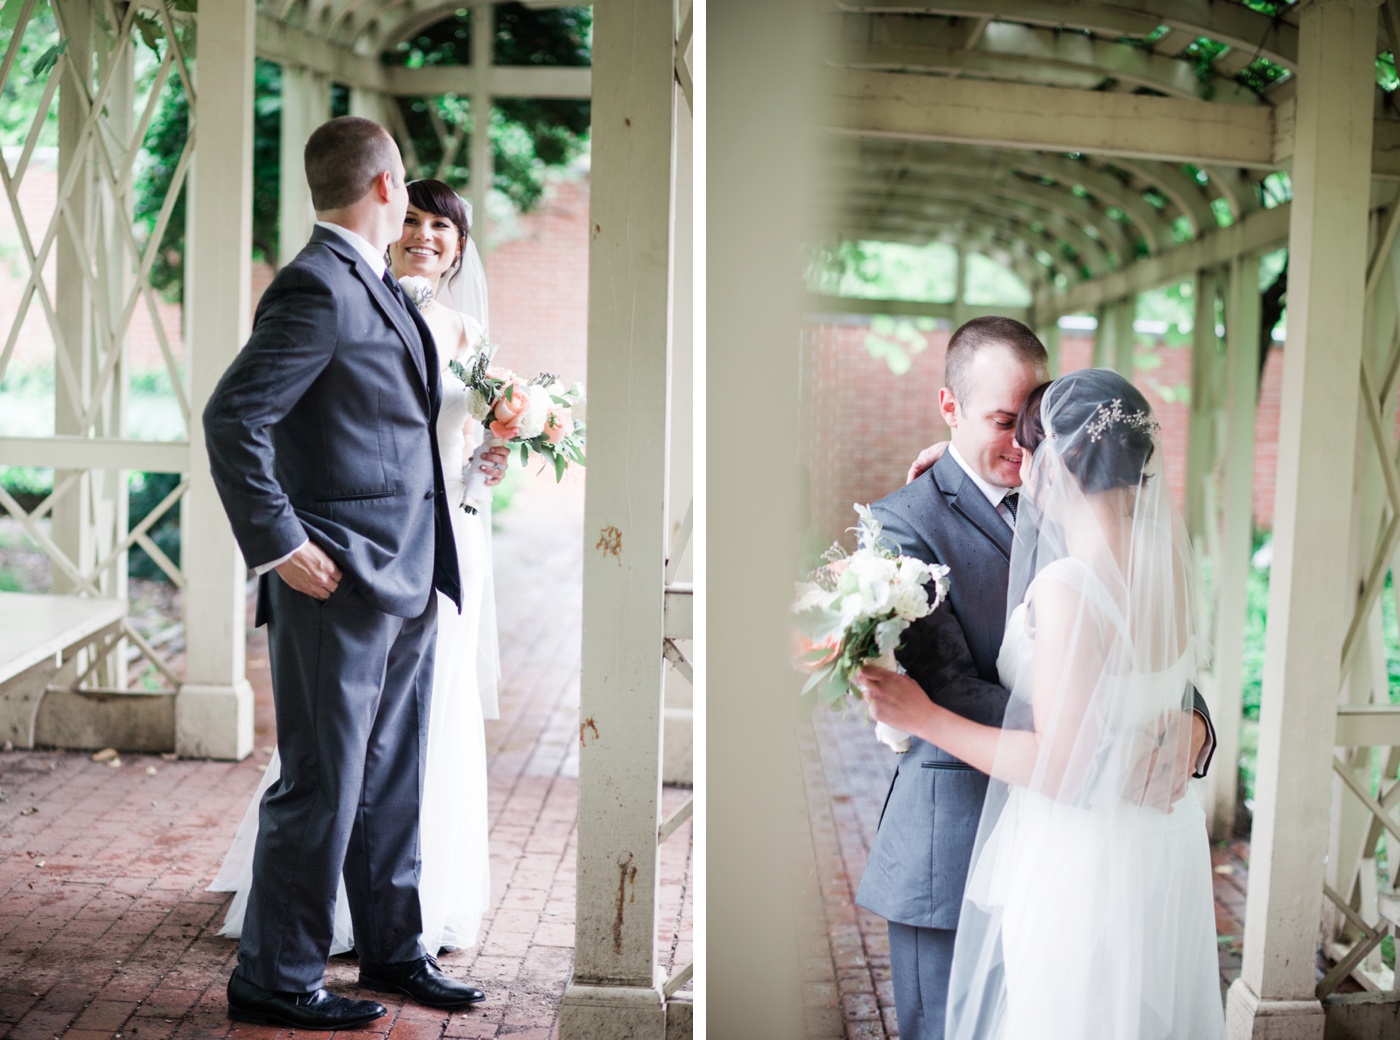 Lauren + Steve - Liberty View Ballroom Wedding - Philadelphia Wedding Photographer - Alison Dunn Photography photo